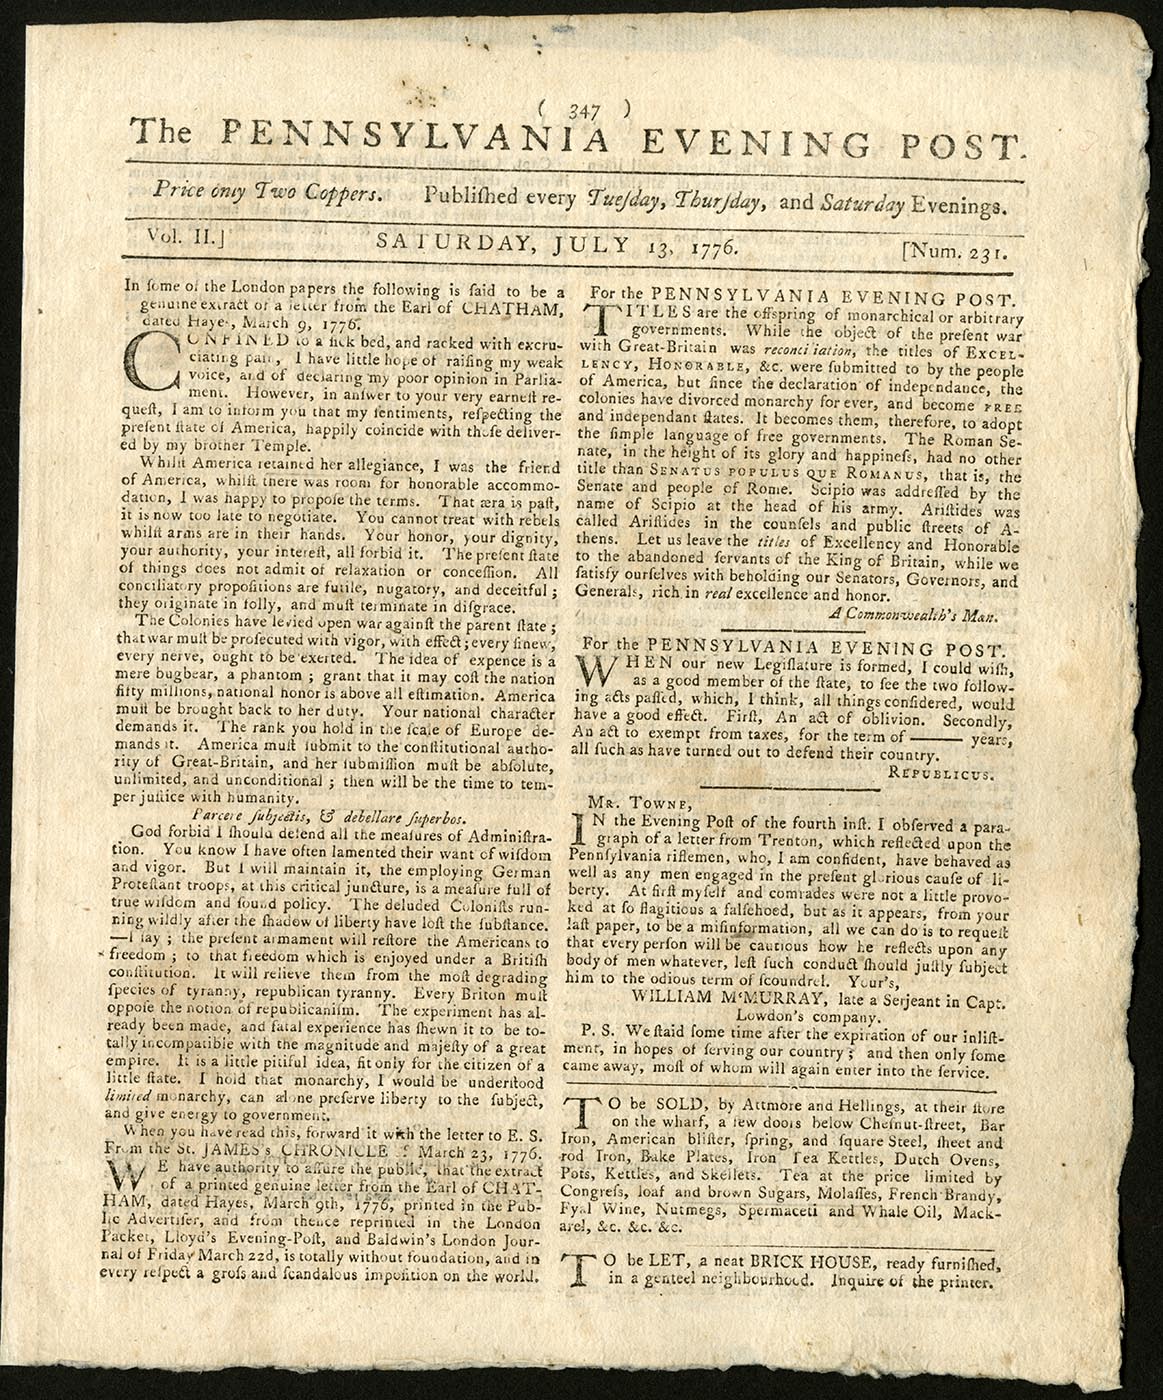 The Pennsylvania Evening Post, July 13, 1776 (The Gilder Lehrman Institute, GLC03235.231)